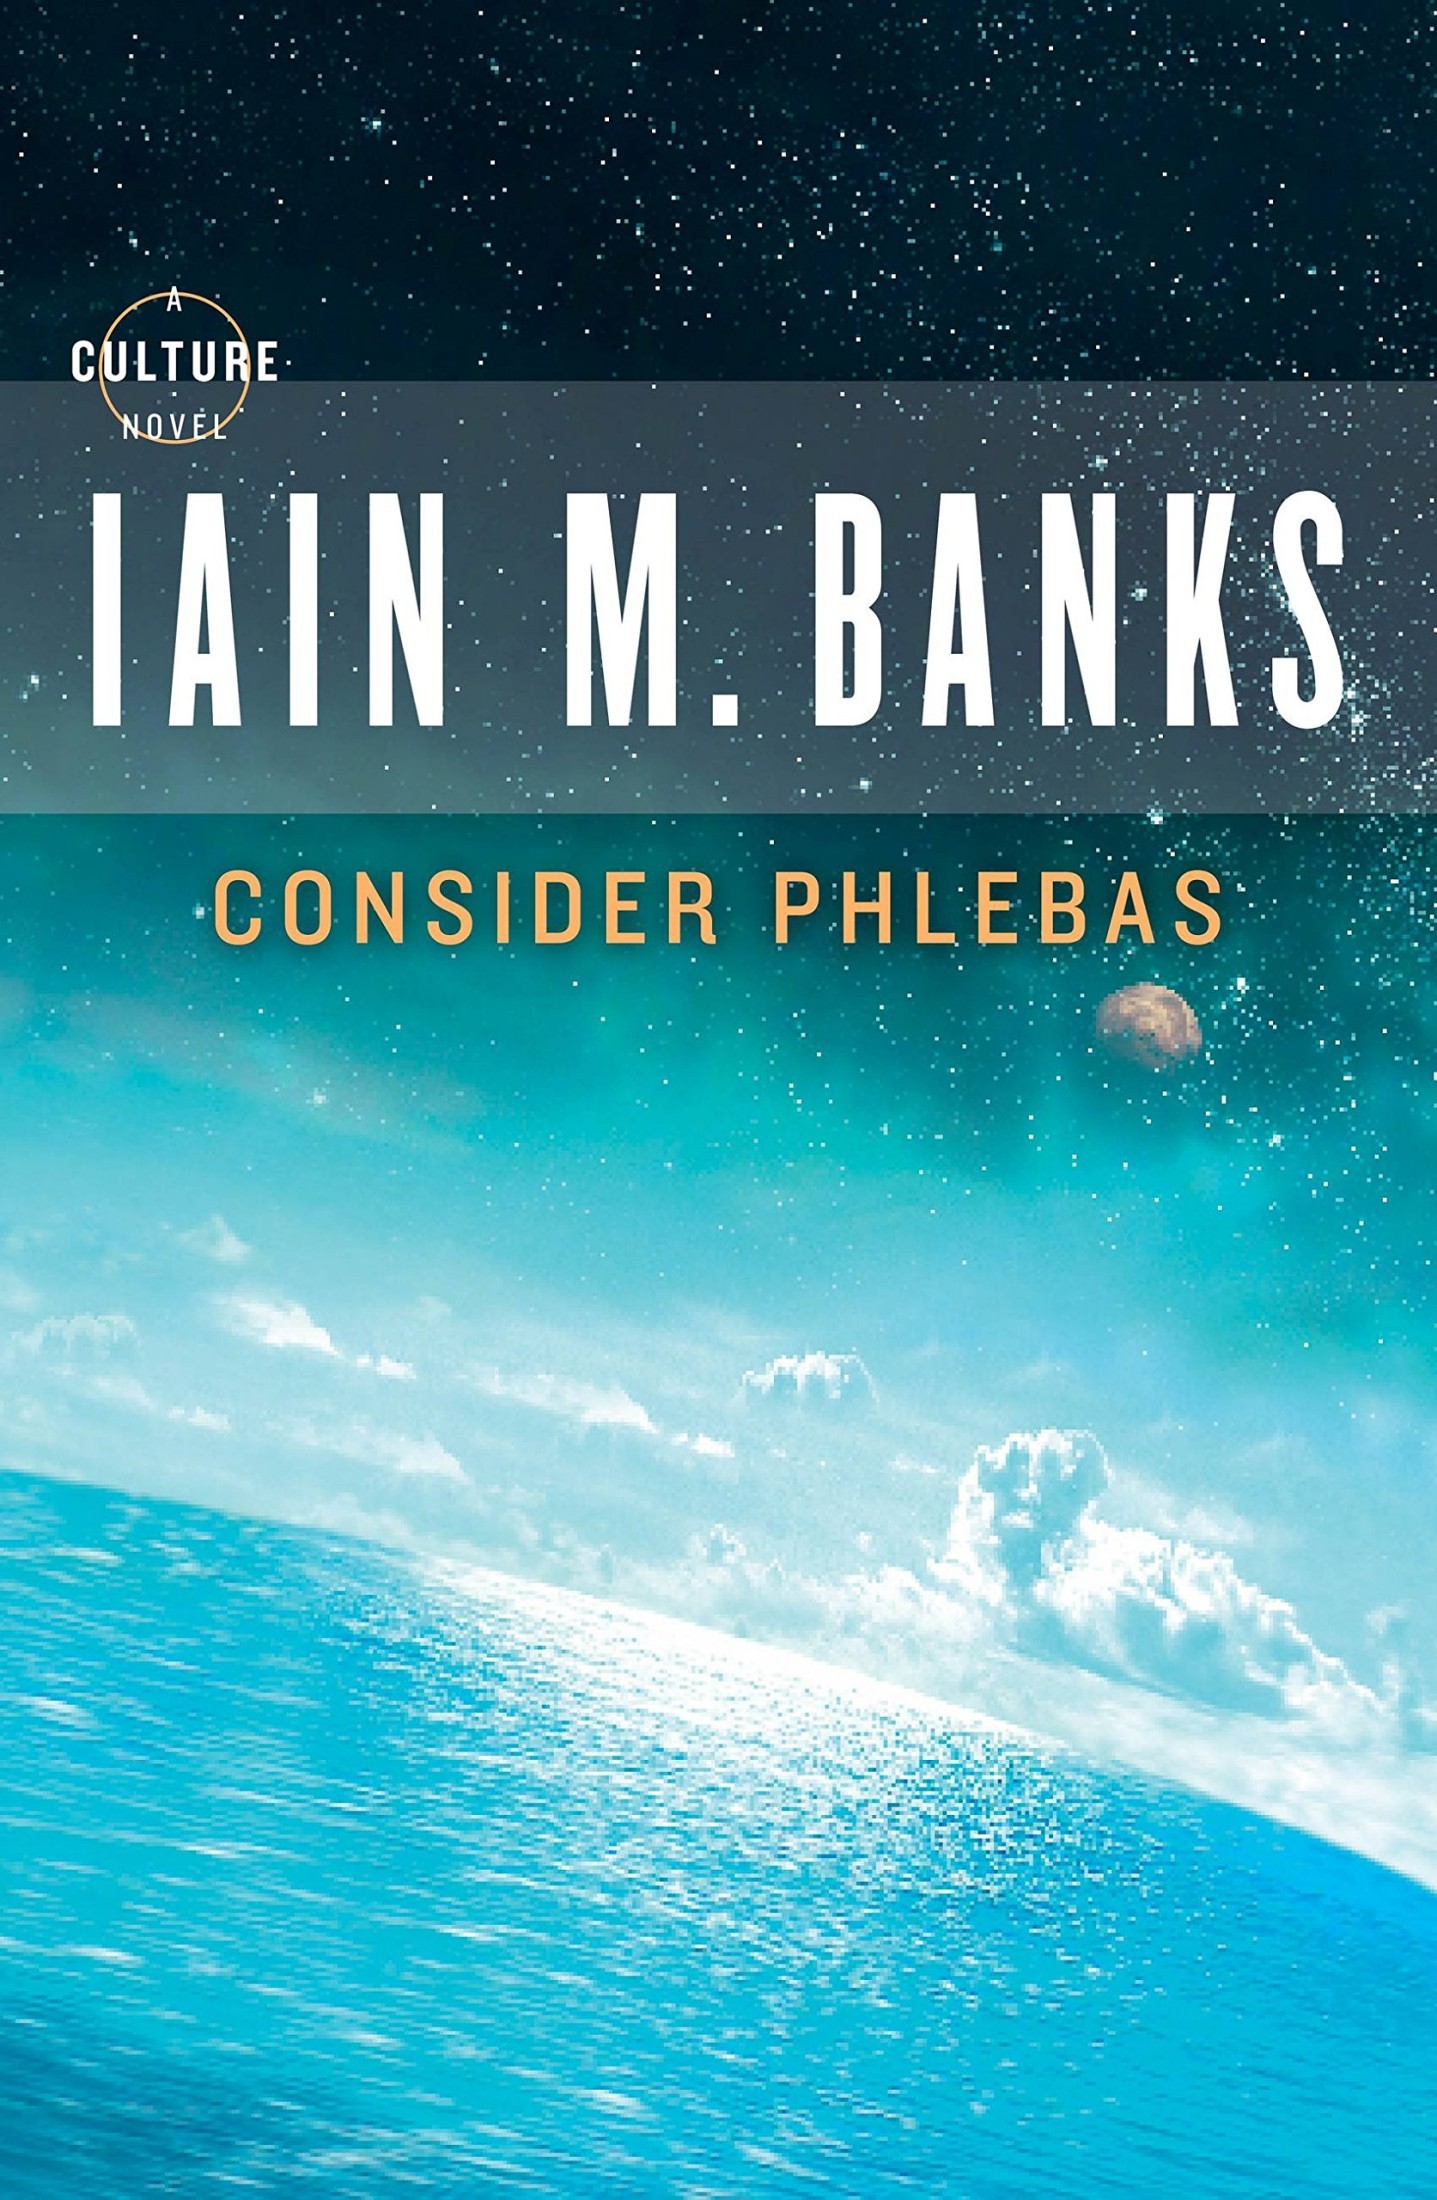 Iain M. Banks: Consider Phlebas (EBook, 2009, Orbit)